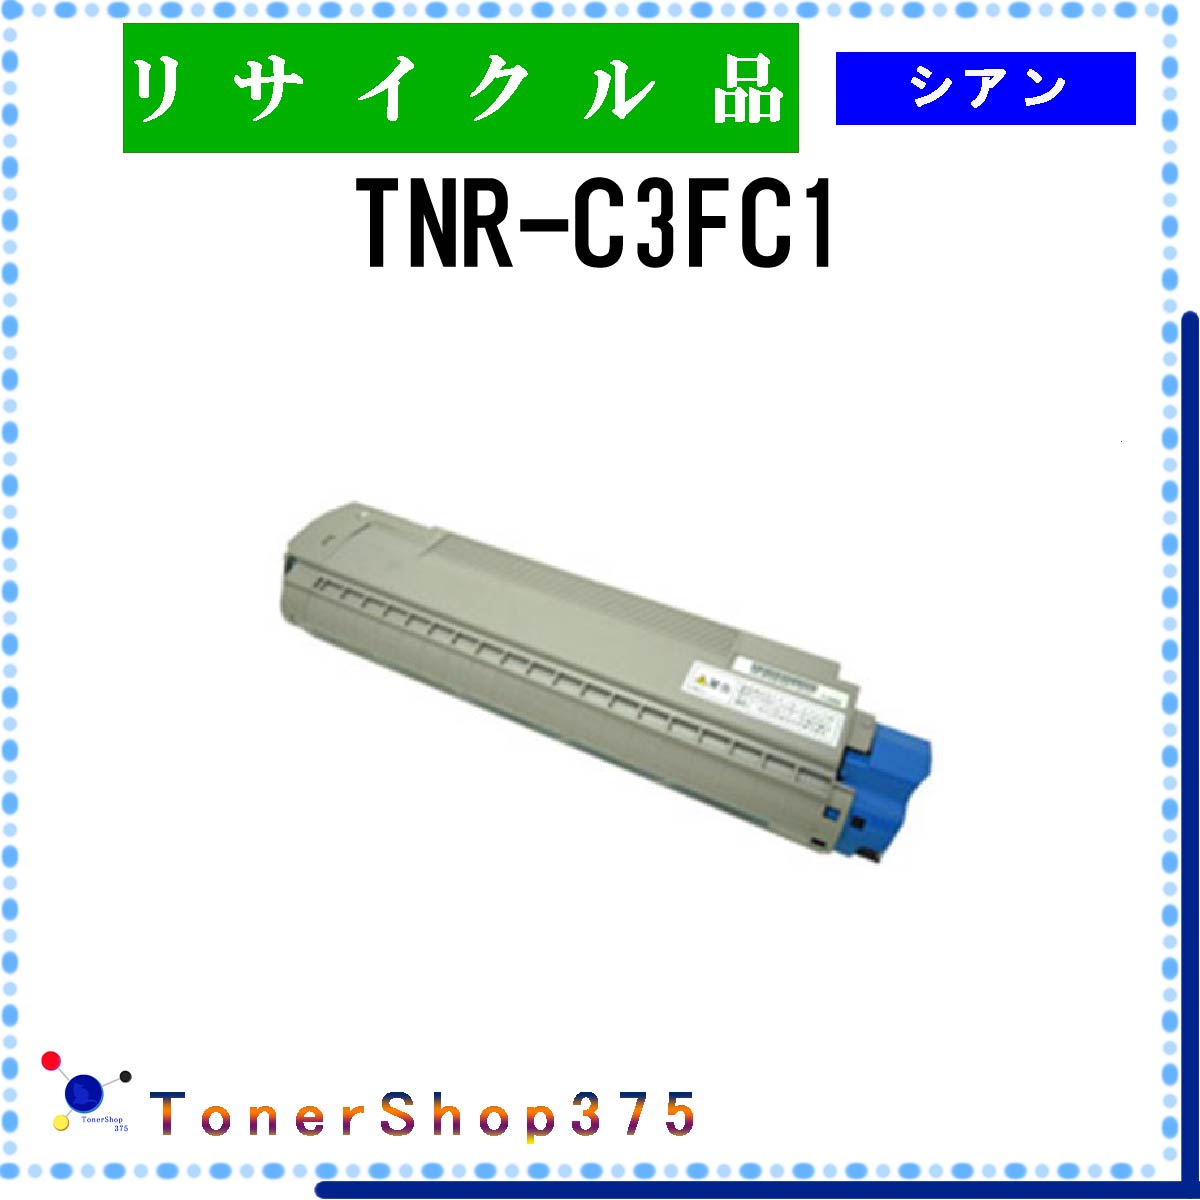 OKI y TNR-C3FC1 z VA TCN gi[ TCNHƉFH蒼 STMCF ݌ɕi 